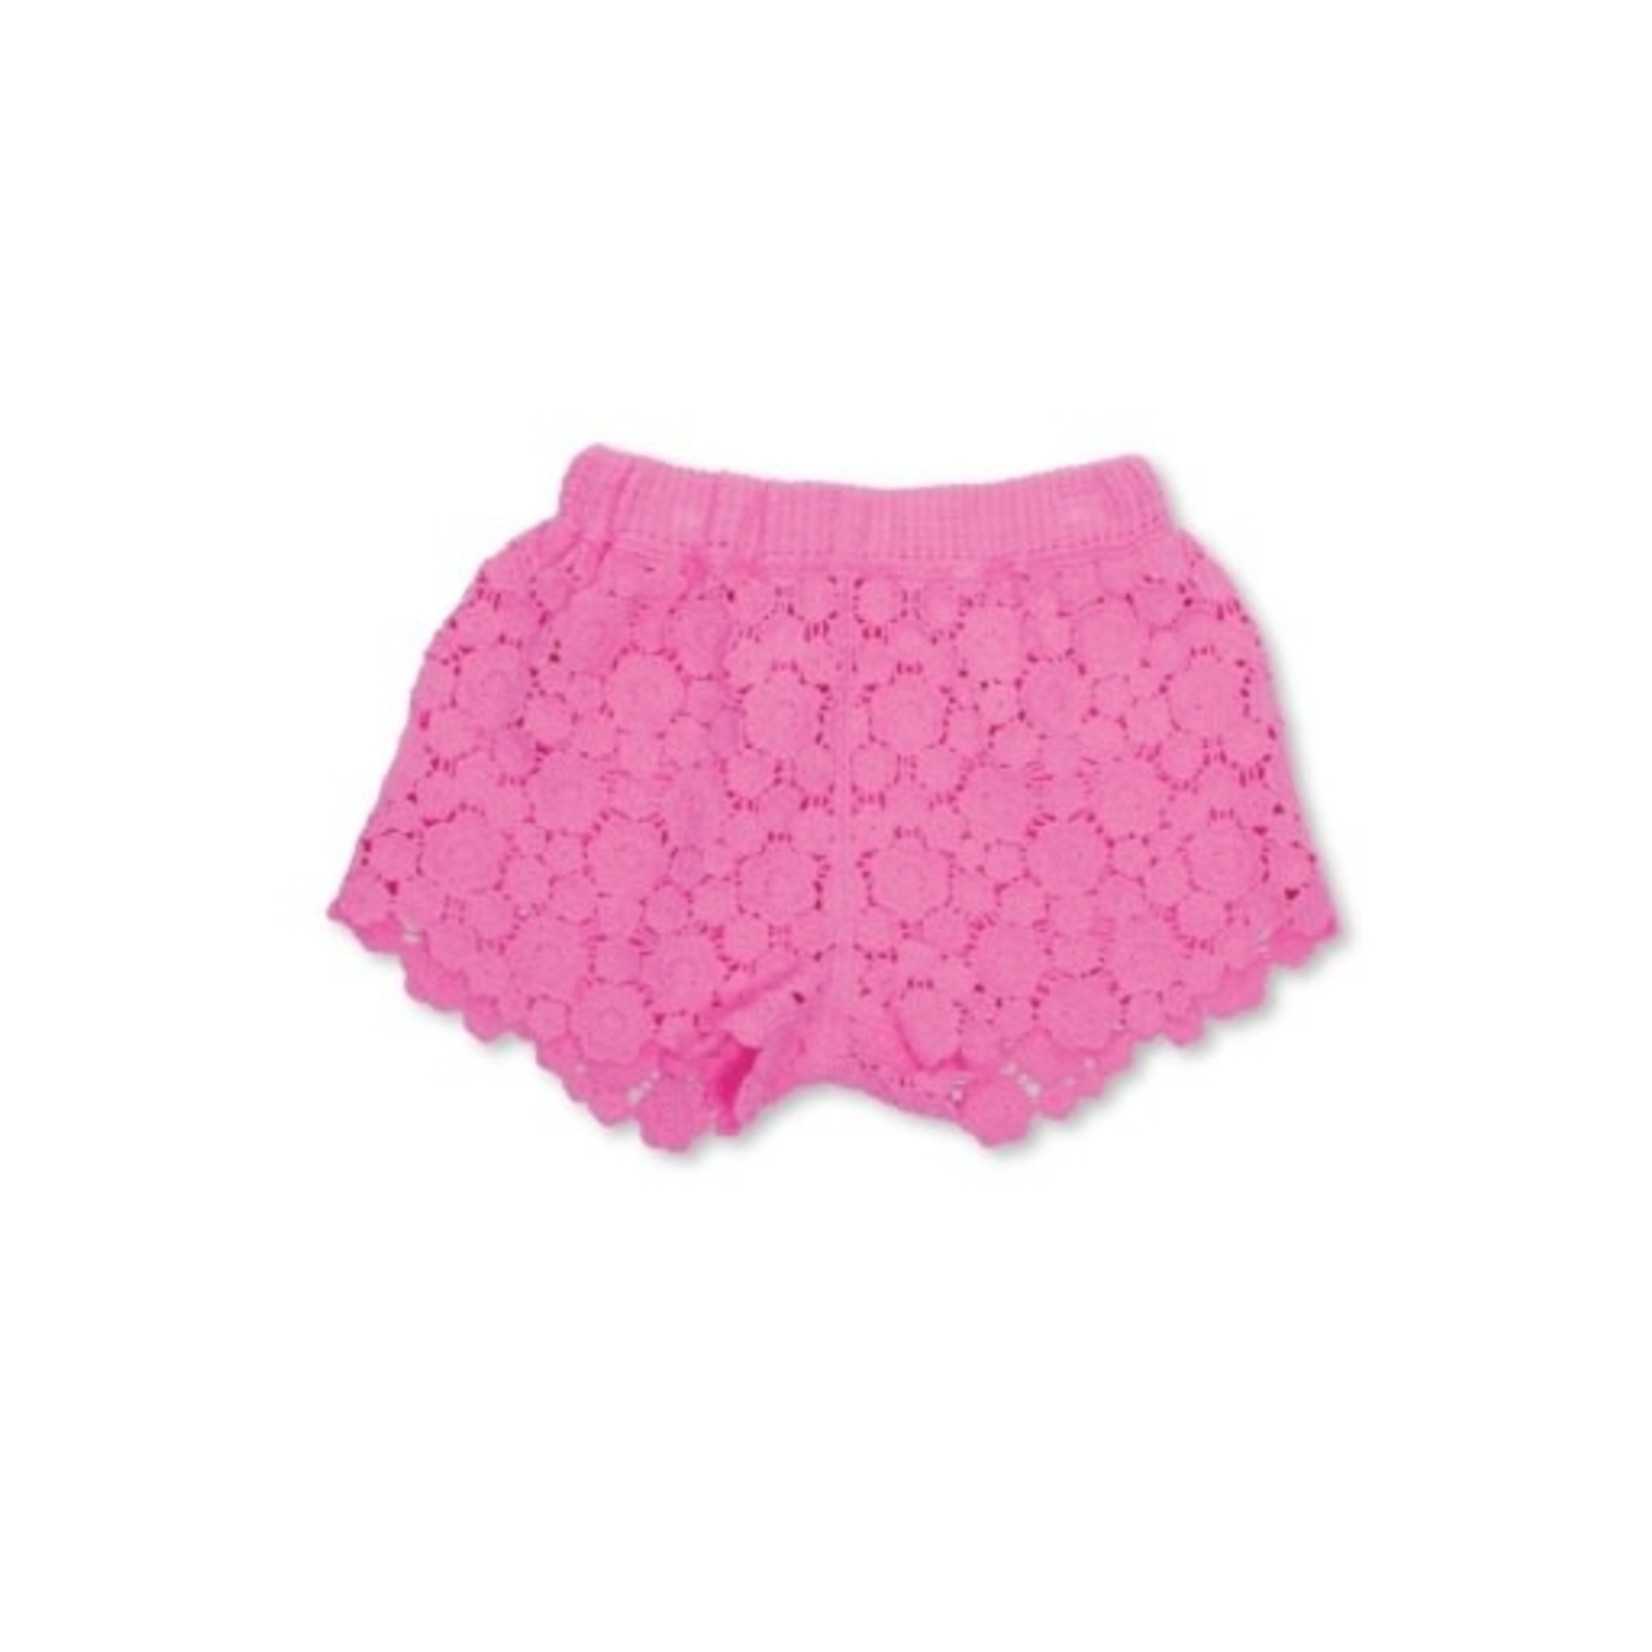 Shade Critters solid daisy crochet short - pink